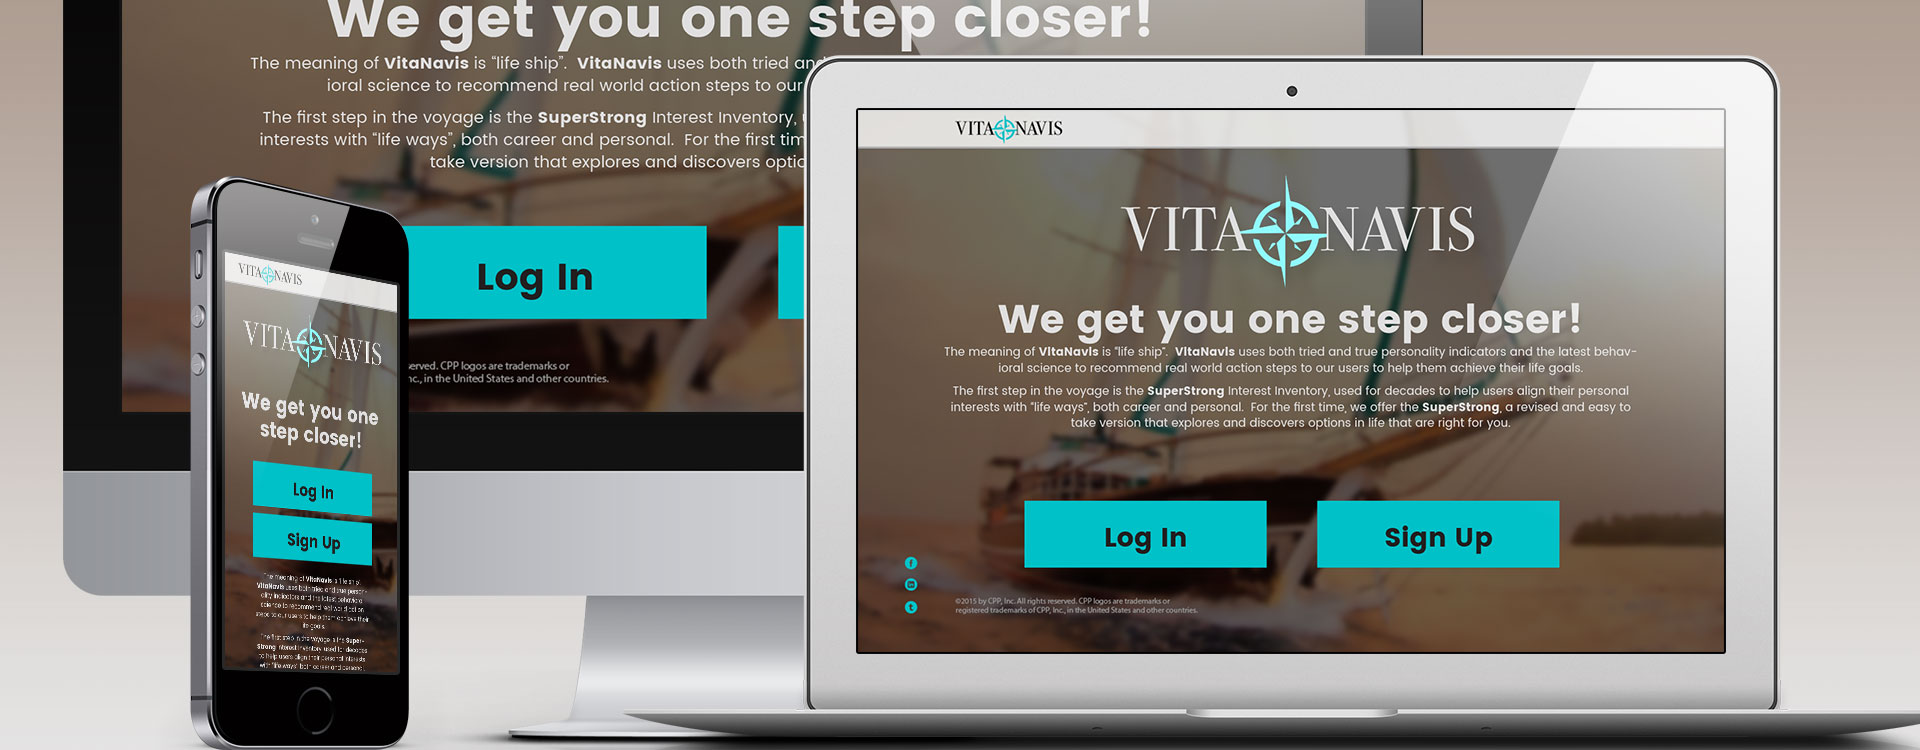 VitaNavis home page